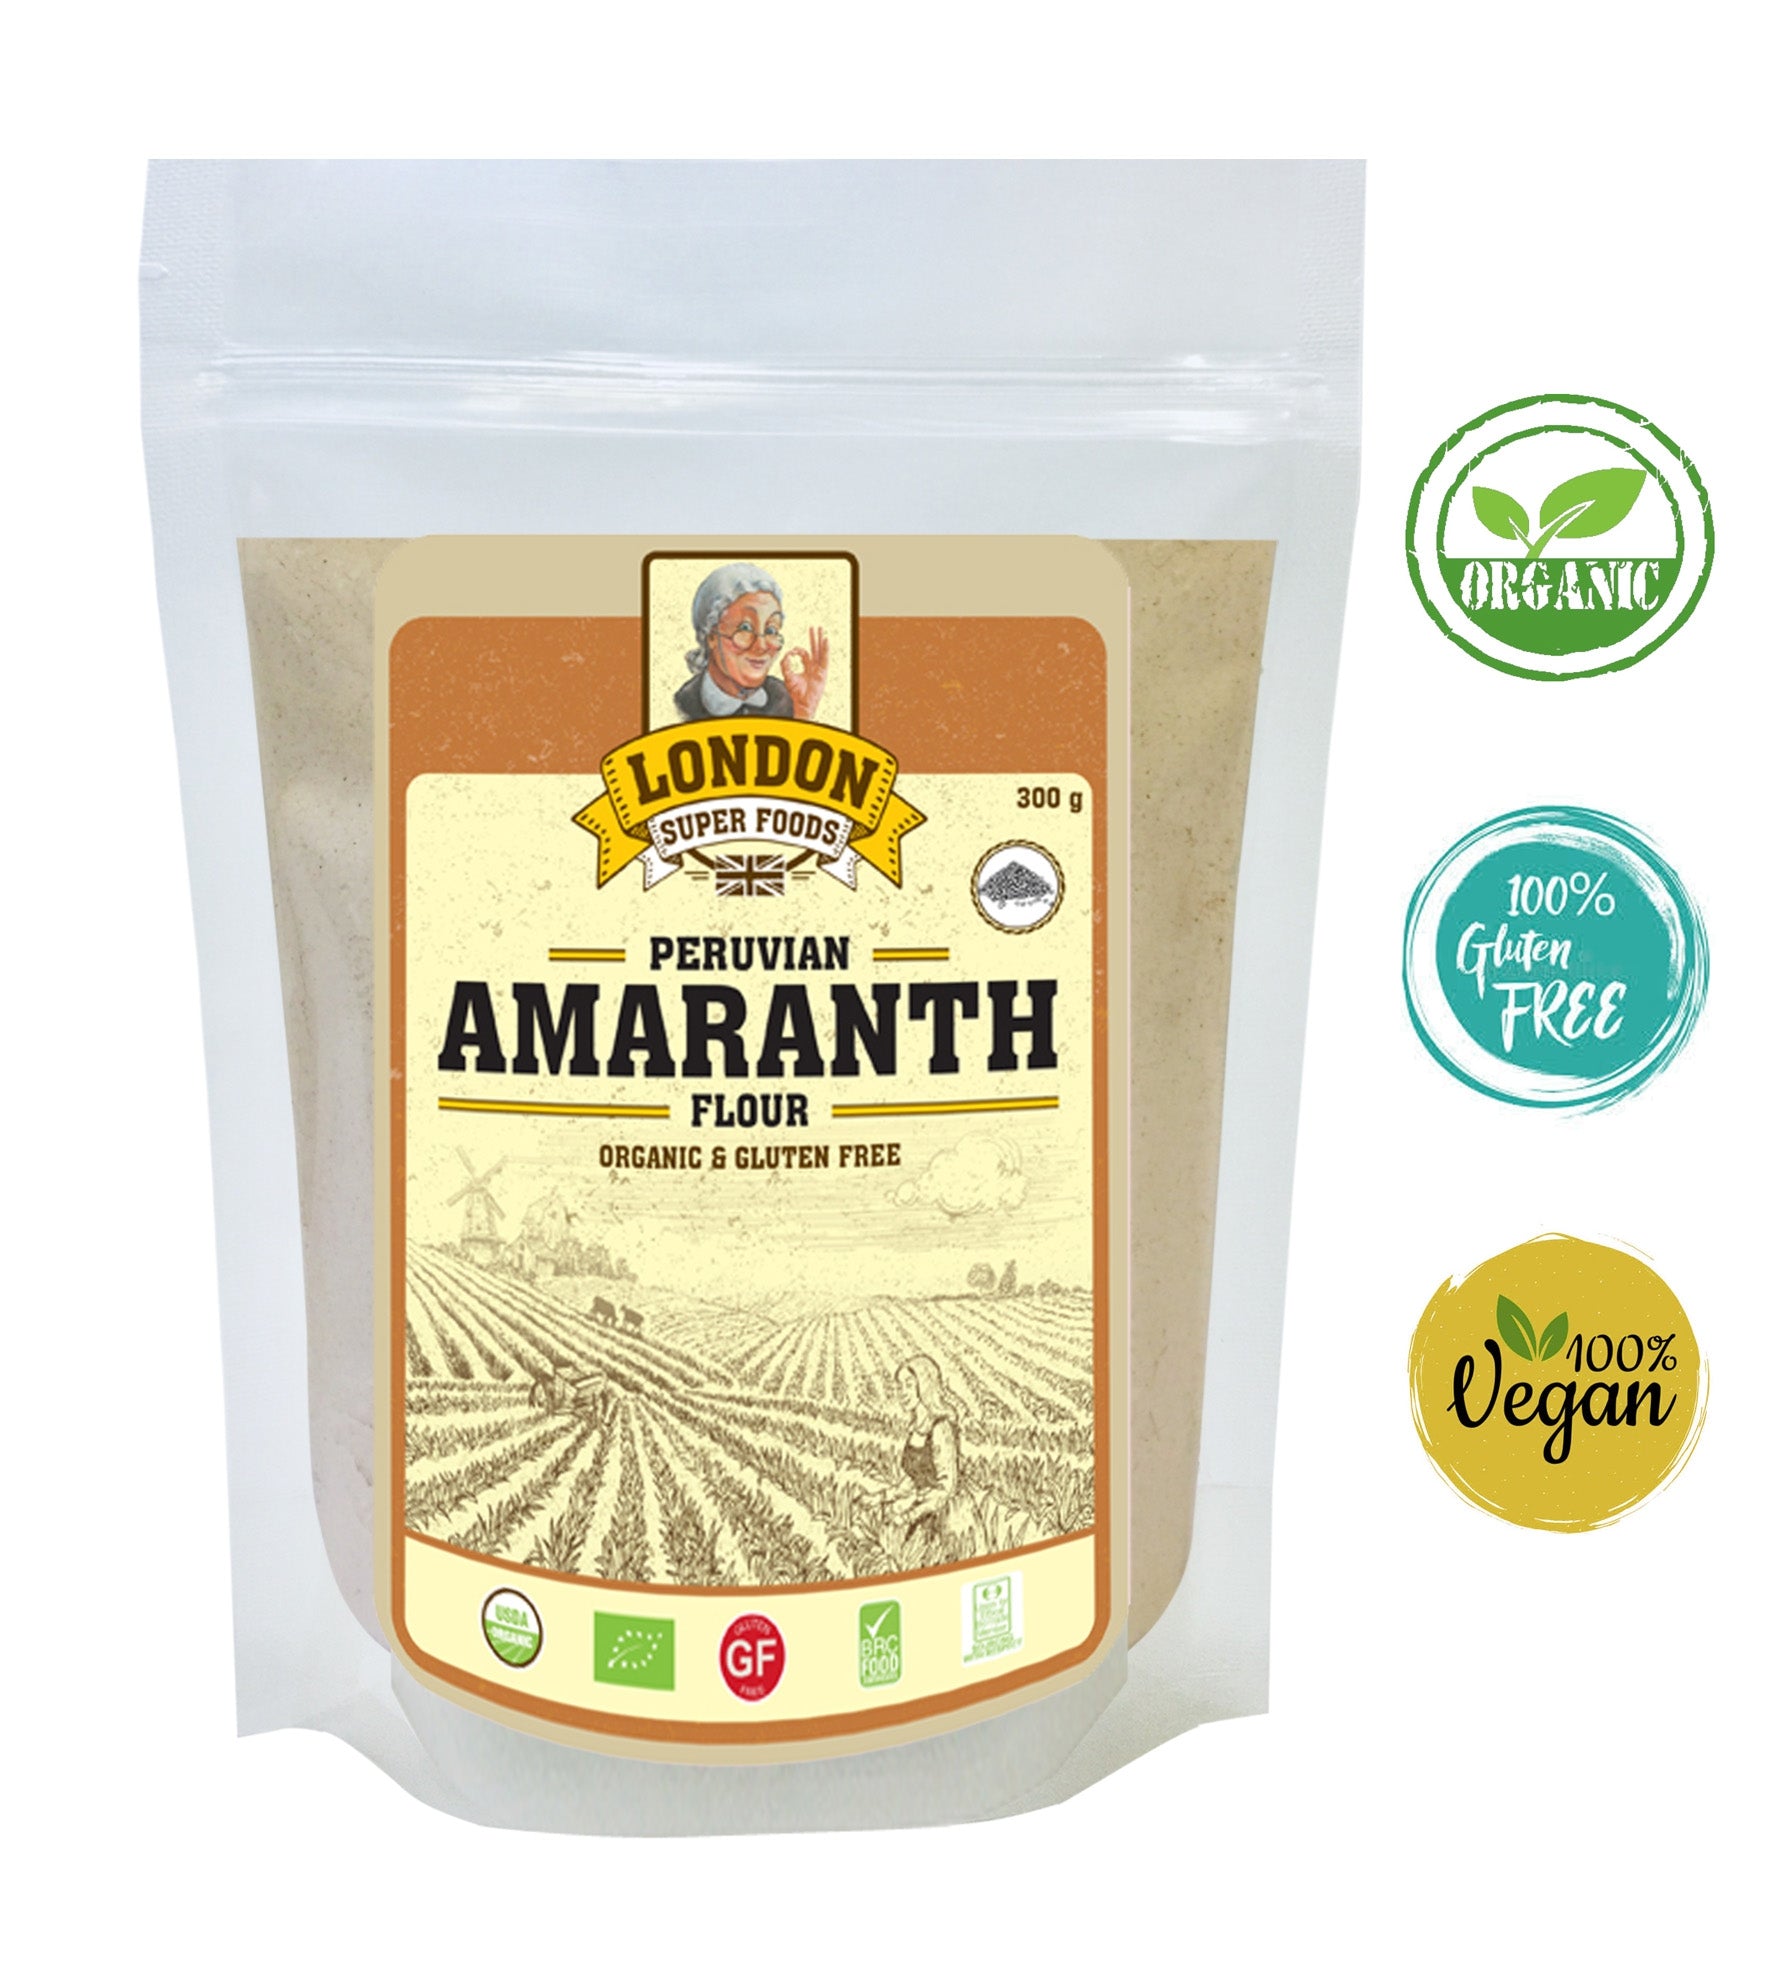 LONDON SUPER FOODS Organic Peruvian Amaranth Flour, 300g